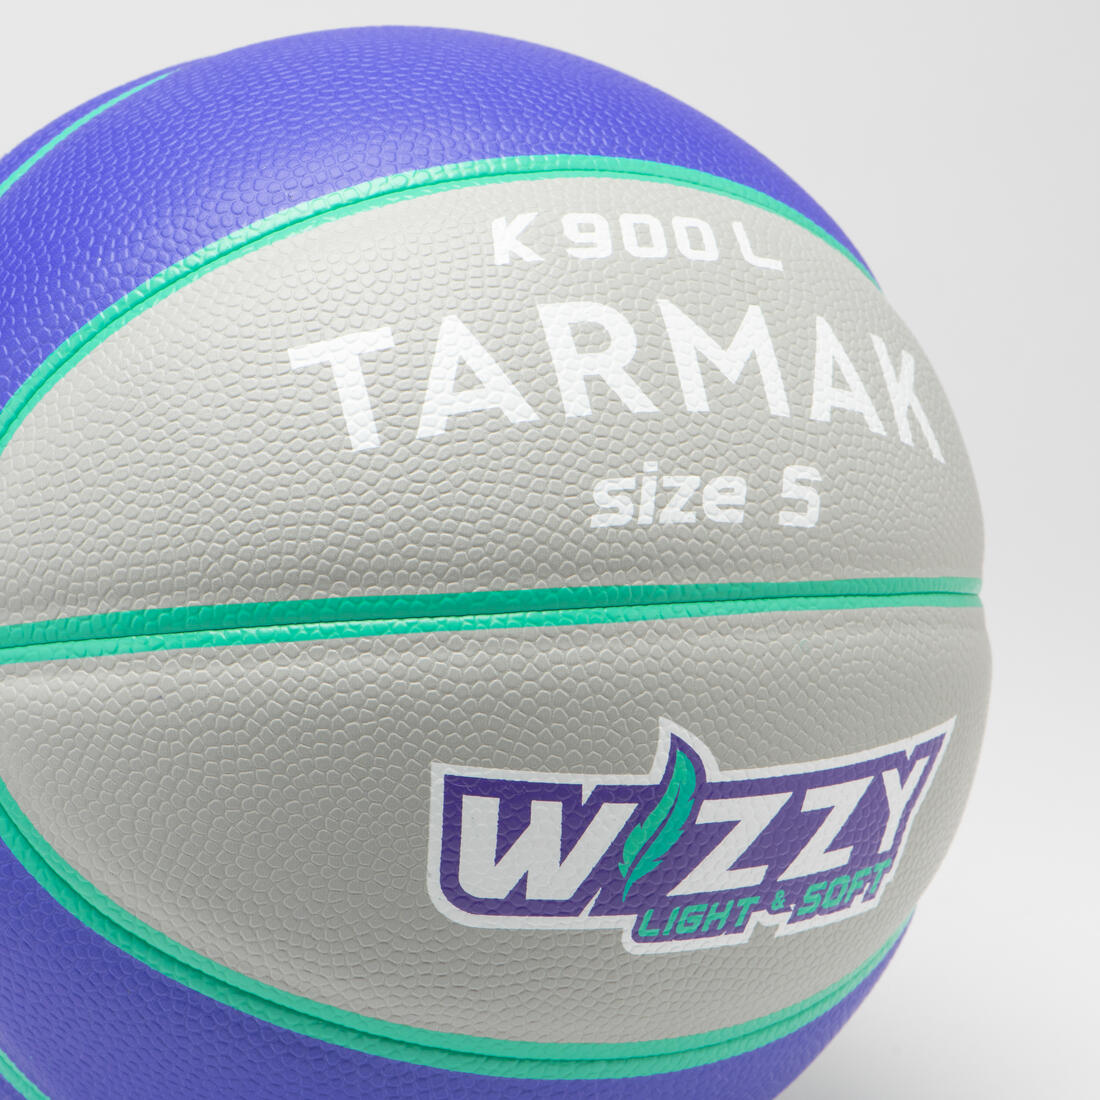 TARMAK (ターマック) ボール K900 Wizzy